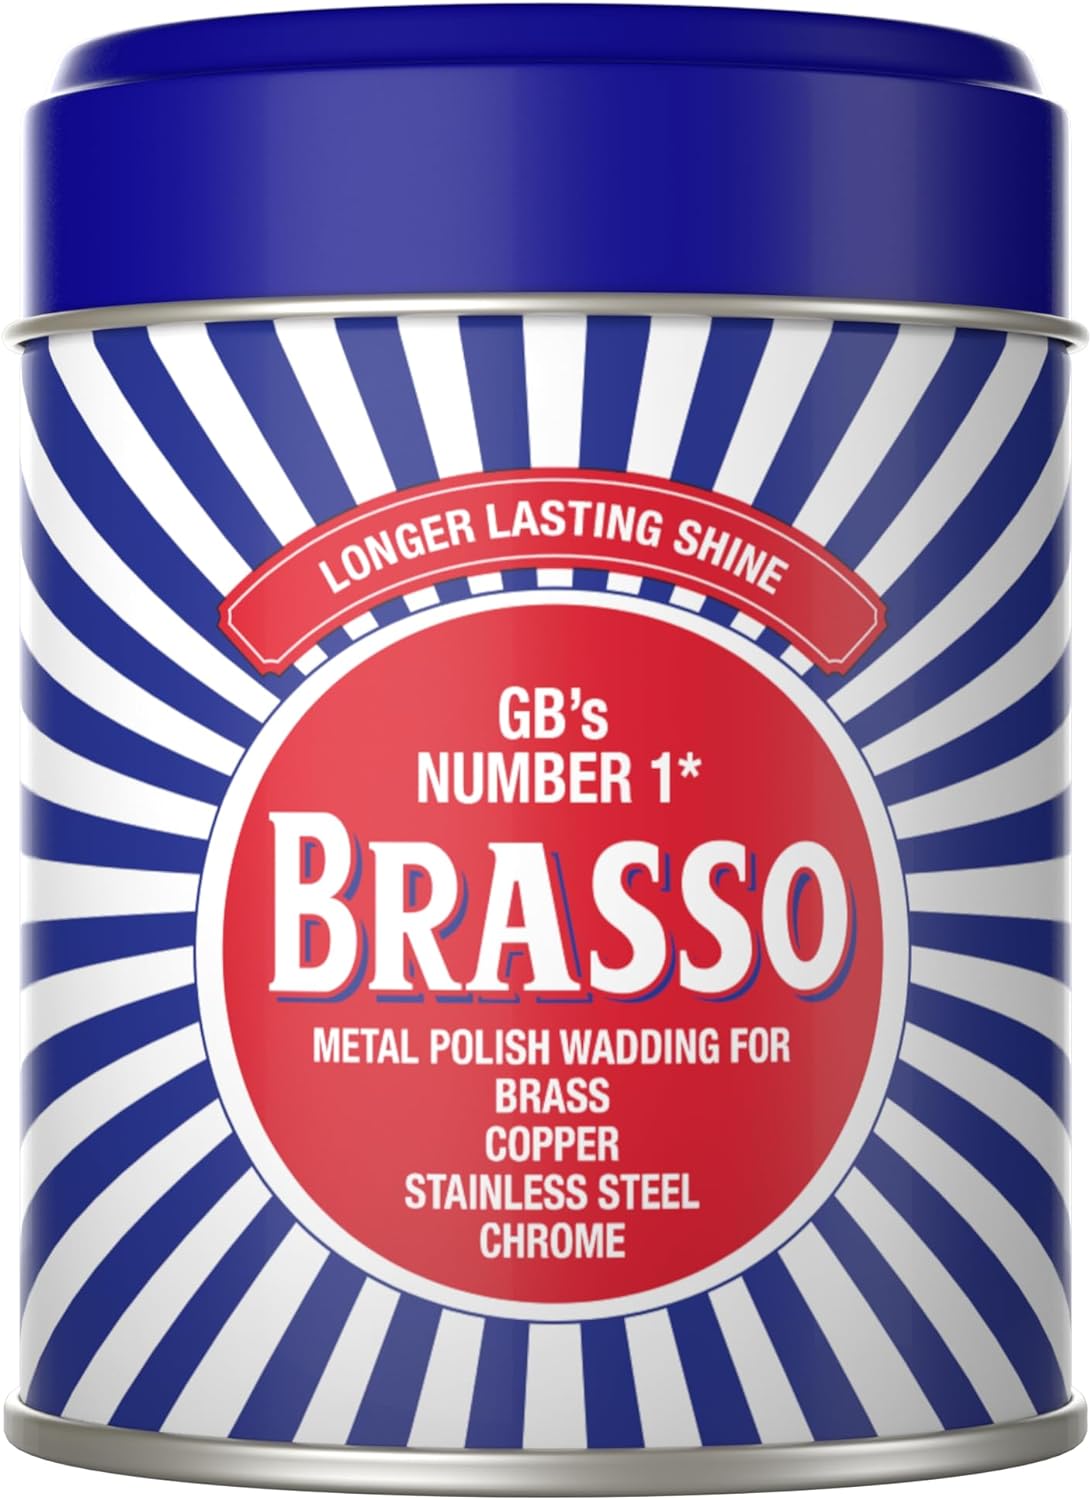 Brasso Metal Polish Wadding - 75g